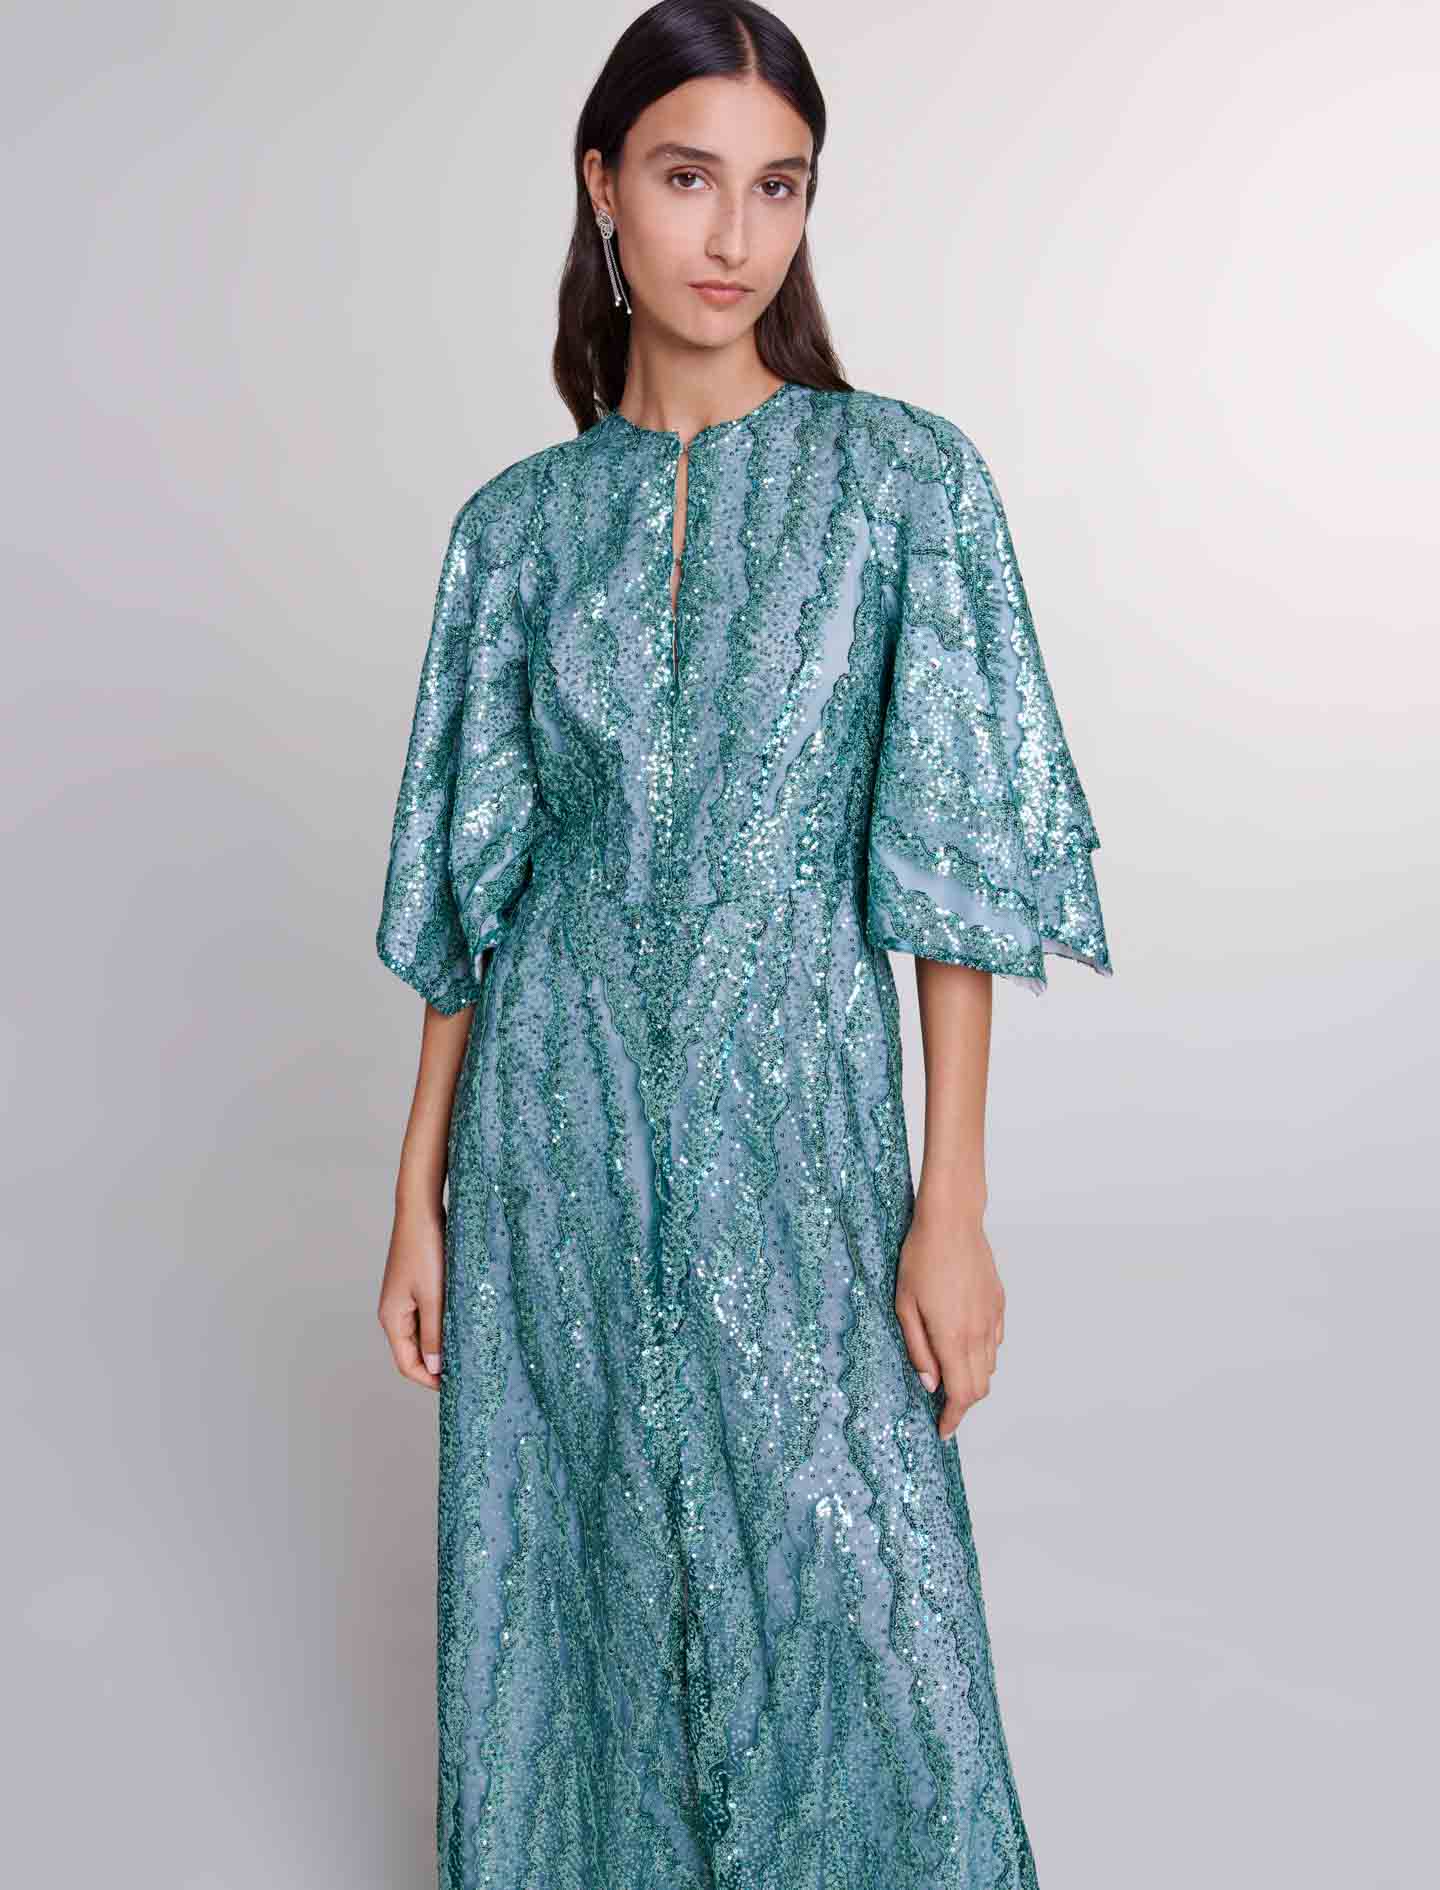 Turquoise-Sequin maxi dress